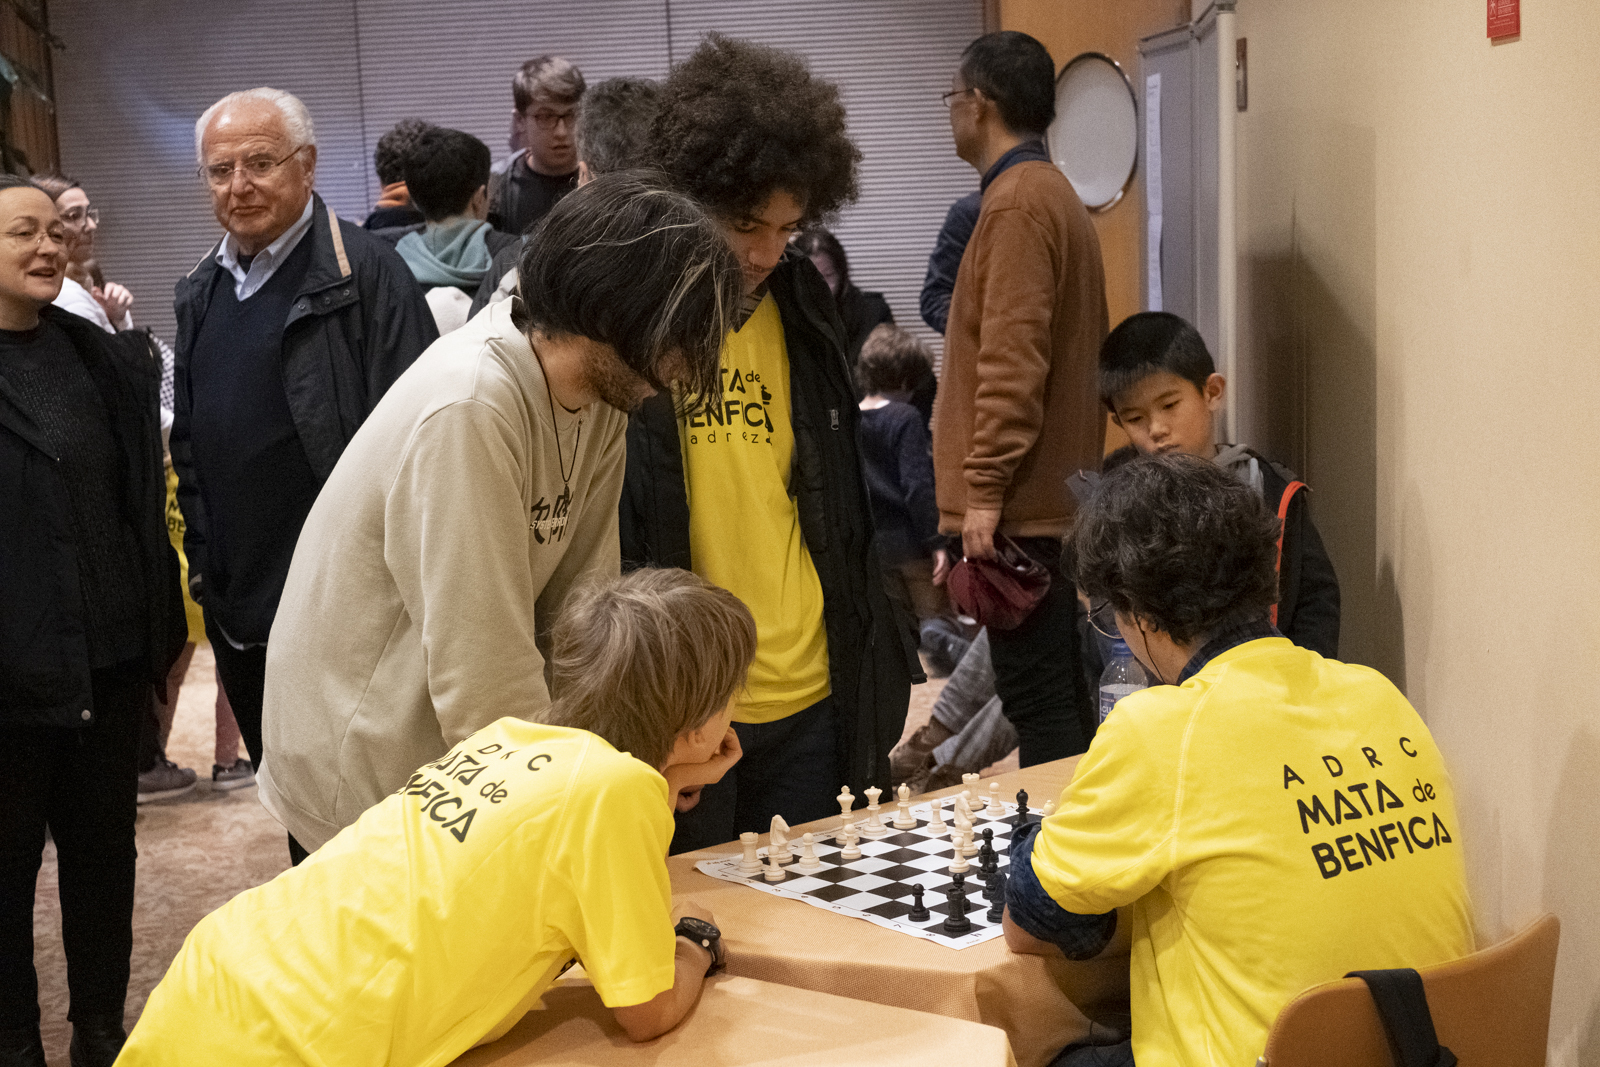 Escola Chinesa de Xadrez: a Próxima Campeã será Chinesa